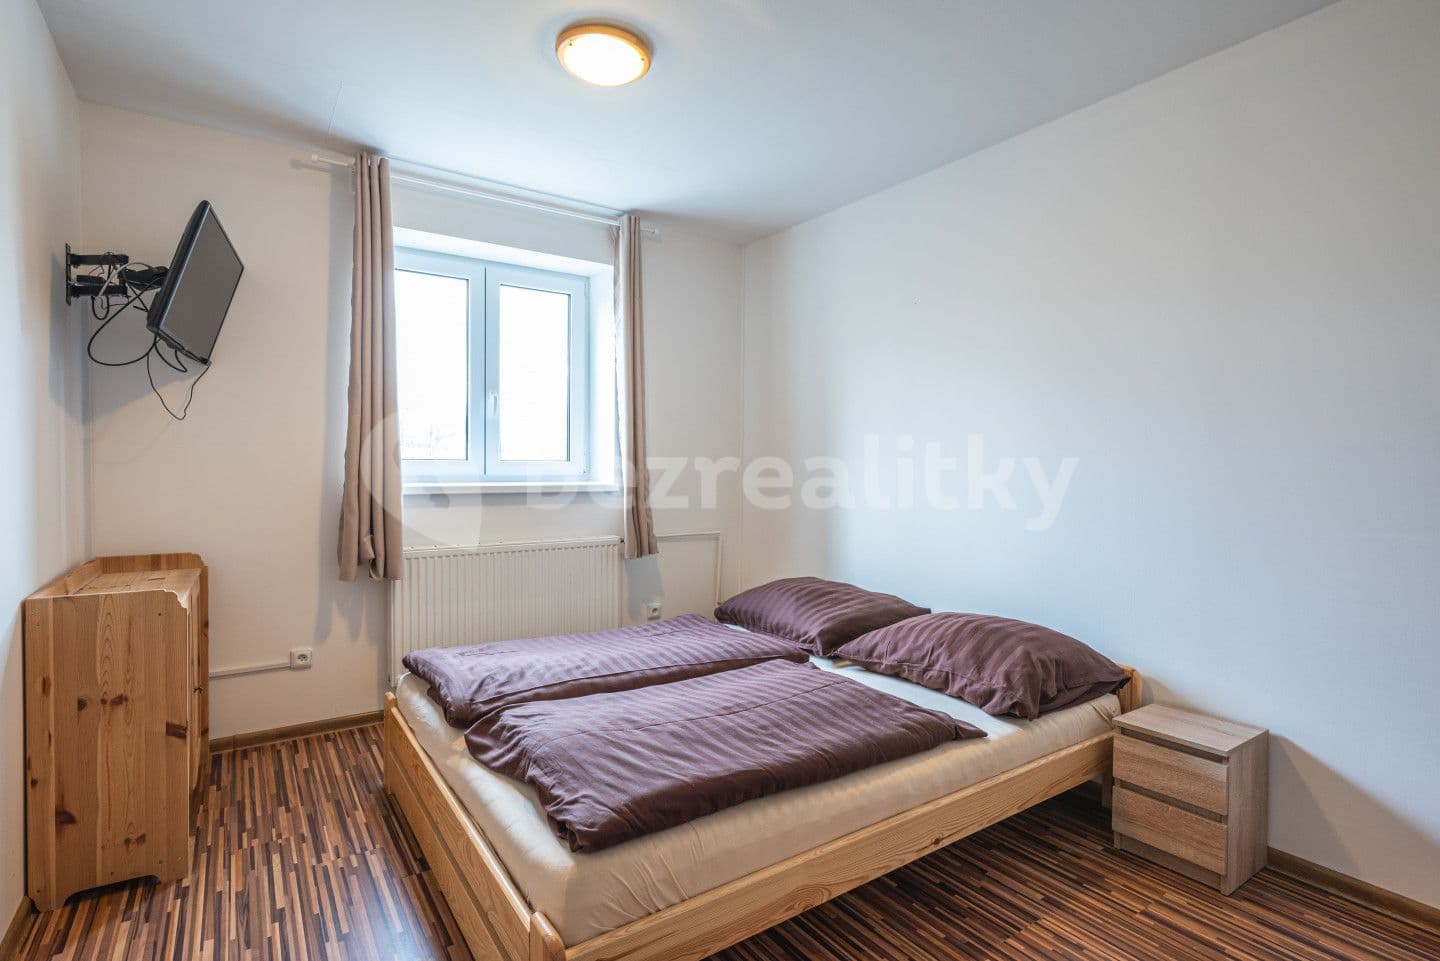 Predaj bytu 2-izbový 43 m², Staré Město, Moravskoslezský kraj